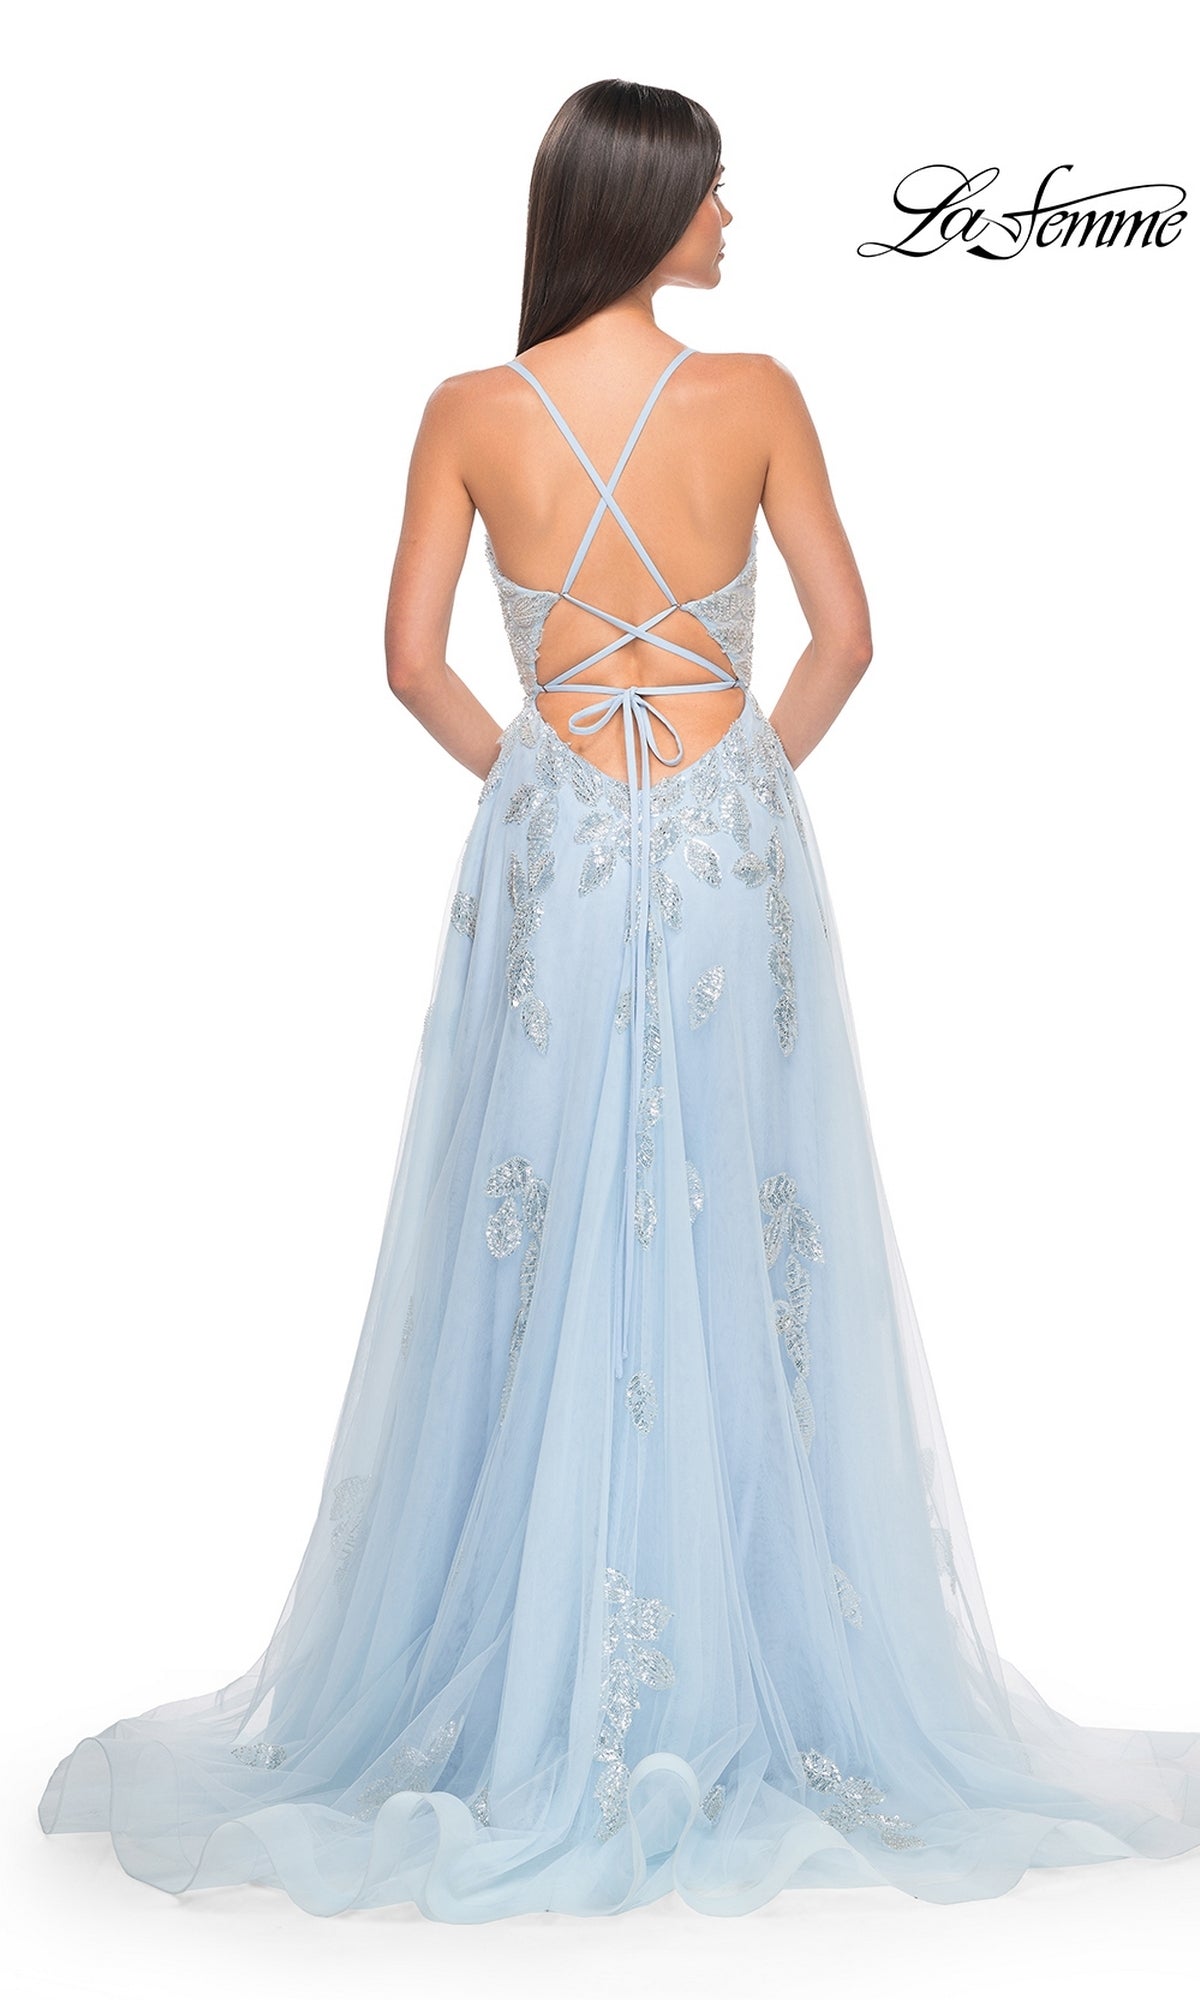  La Femme 32090 Formal Prom Dress